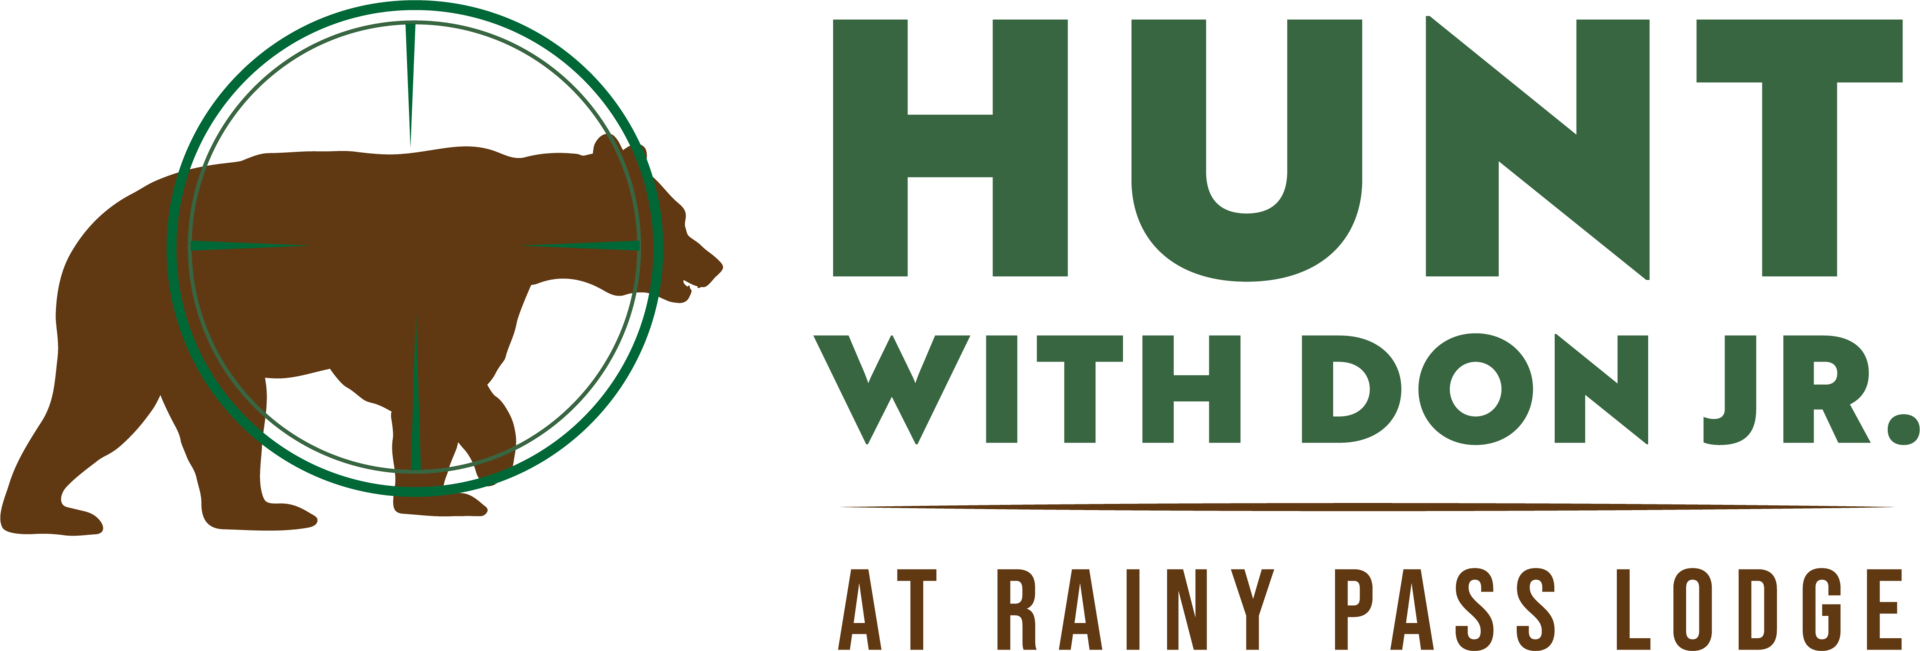 Hunt w don logo %284%29